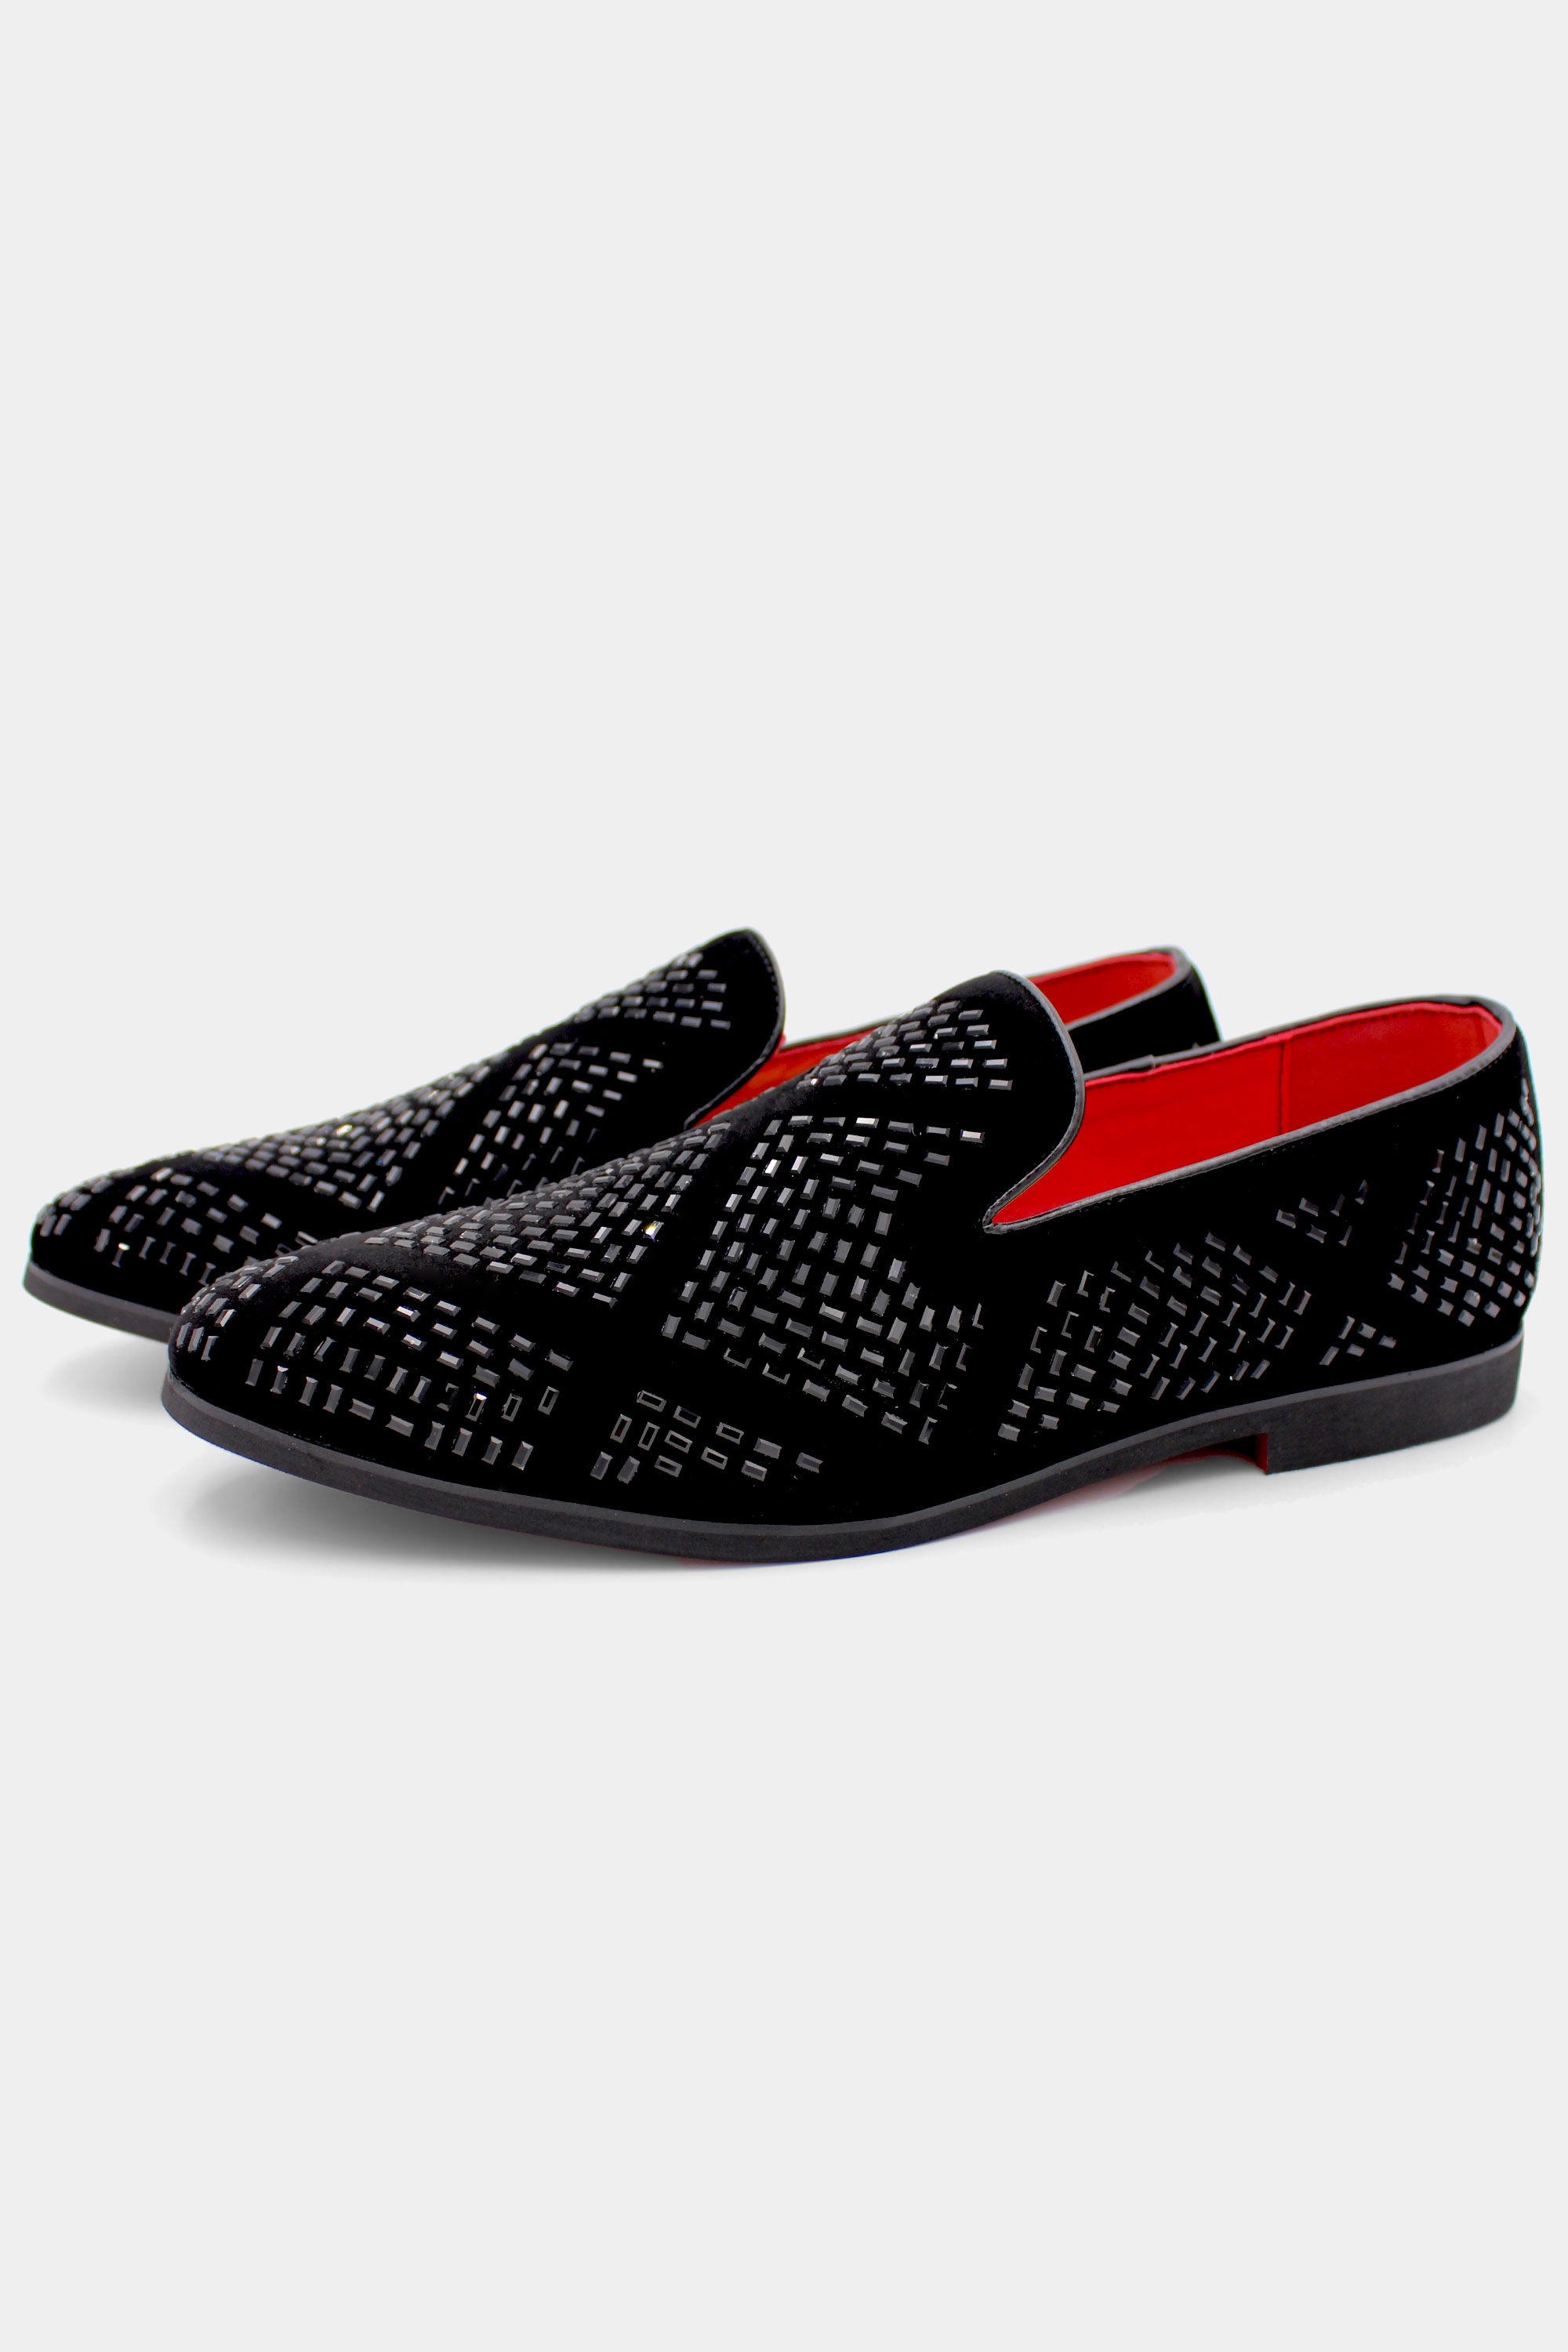 Mens-Rhinestone-Loafers-Shoes-from-Gentlemansguru.com